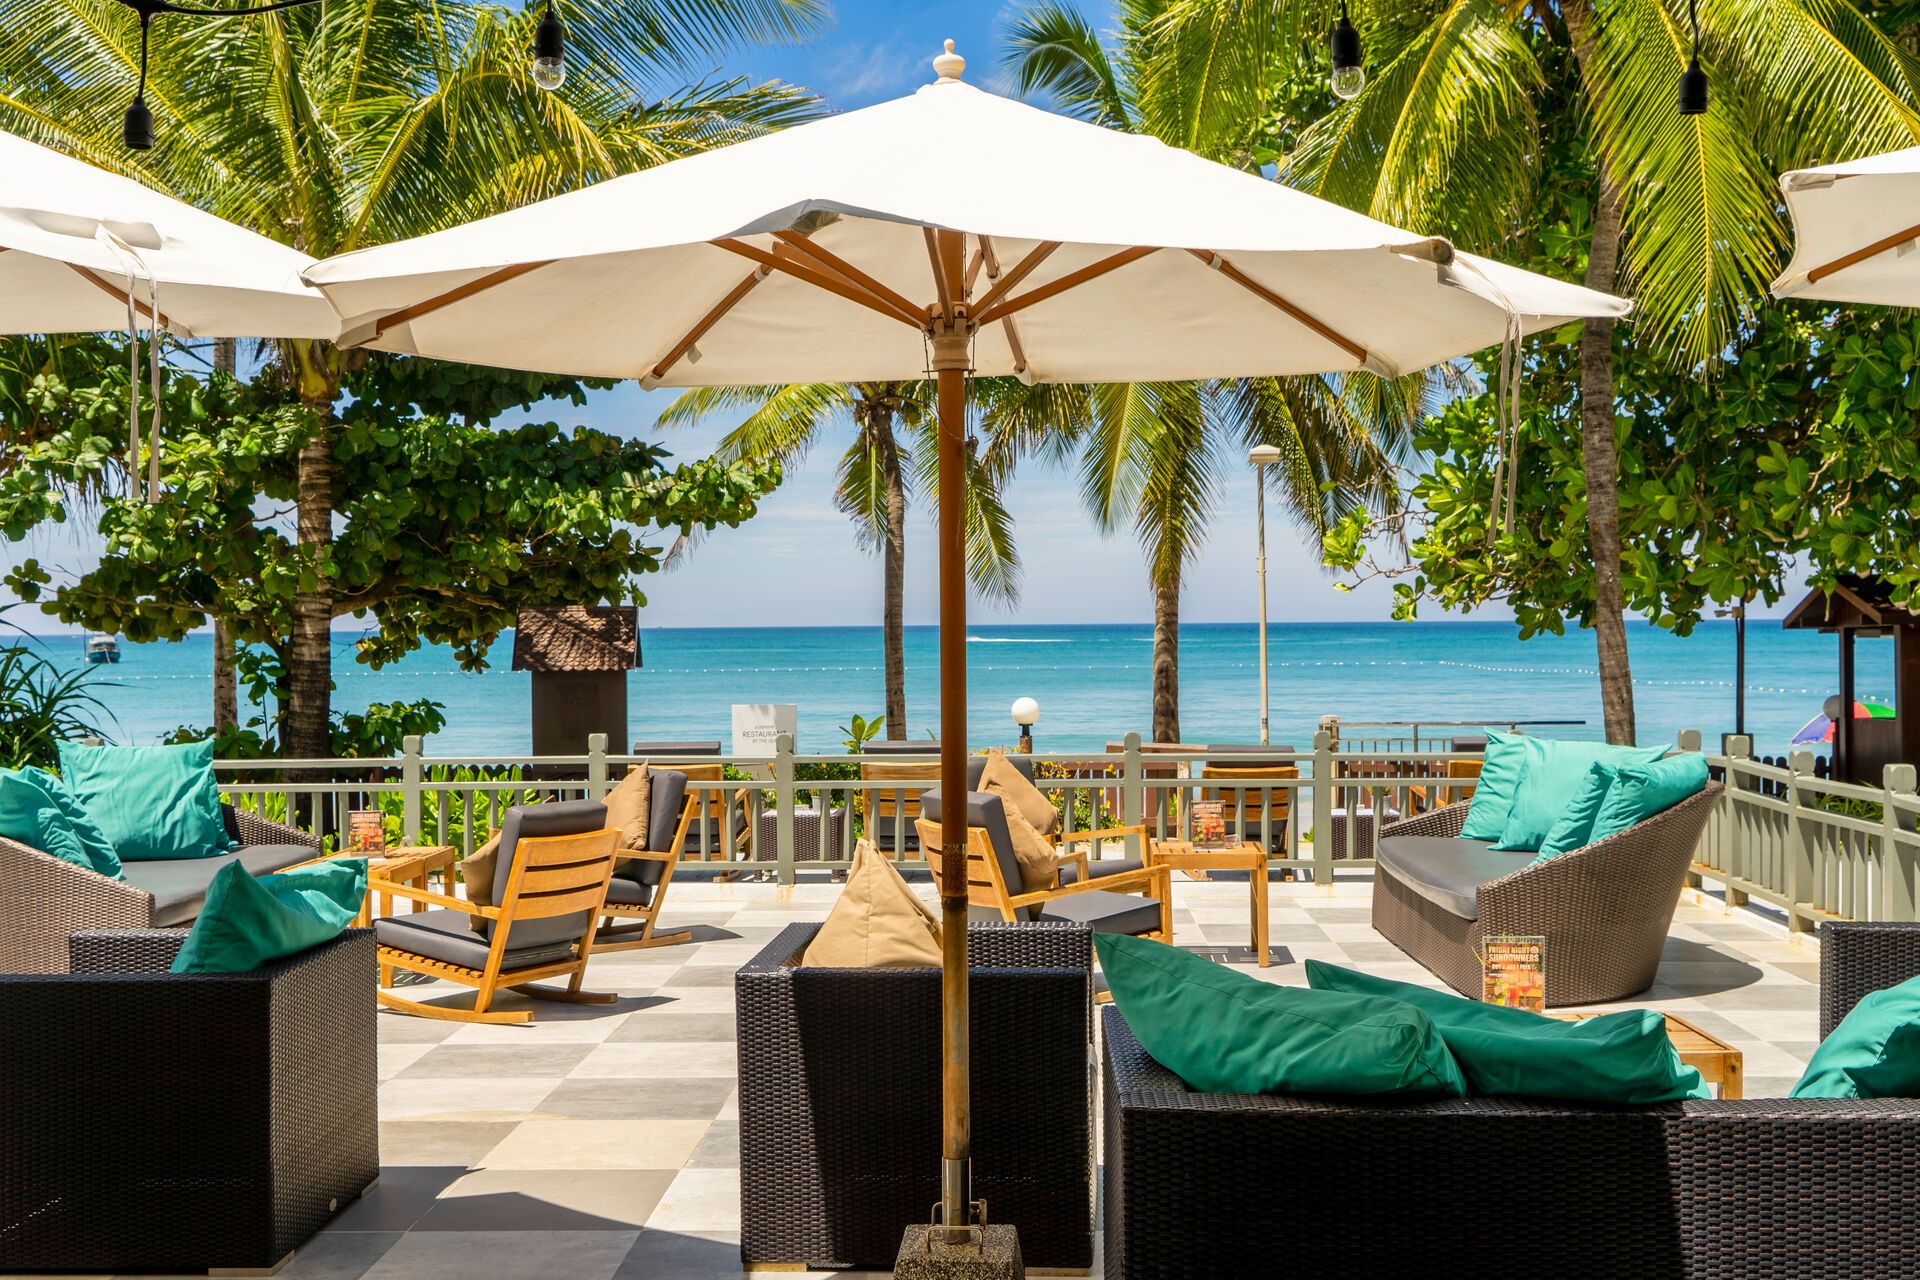 Thaïlande - Phuket - Hôtel Kamala Beach Resort a Sunprime Resort 4*